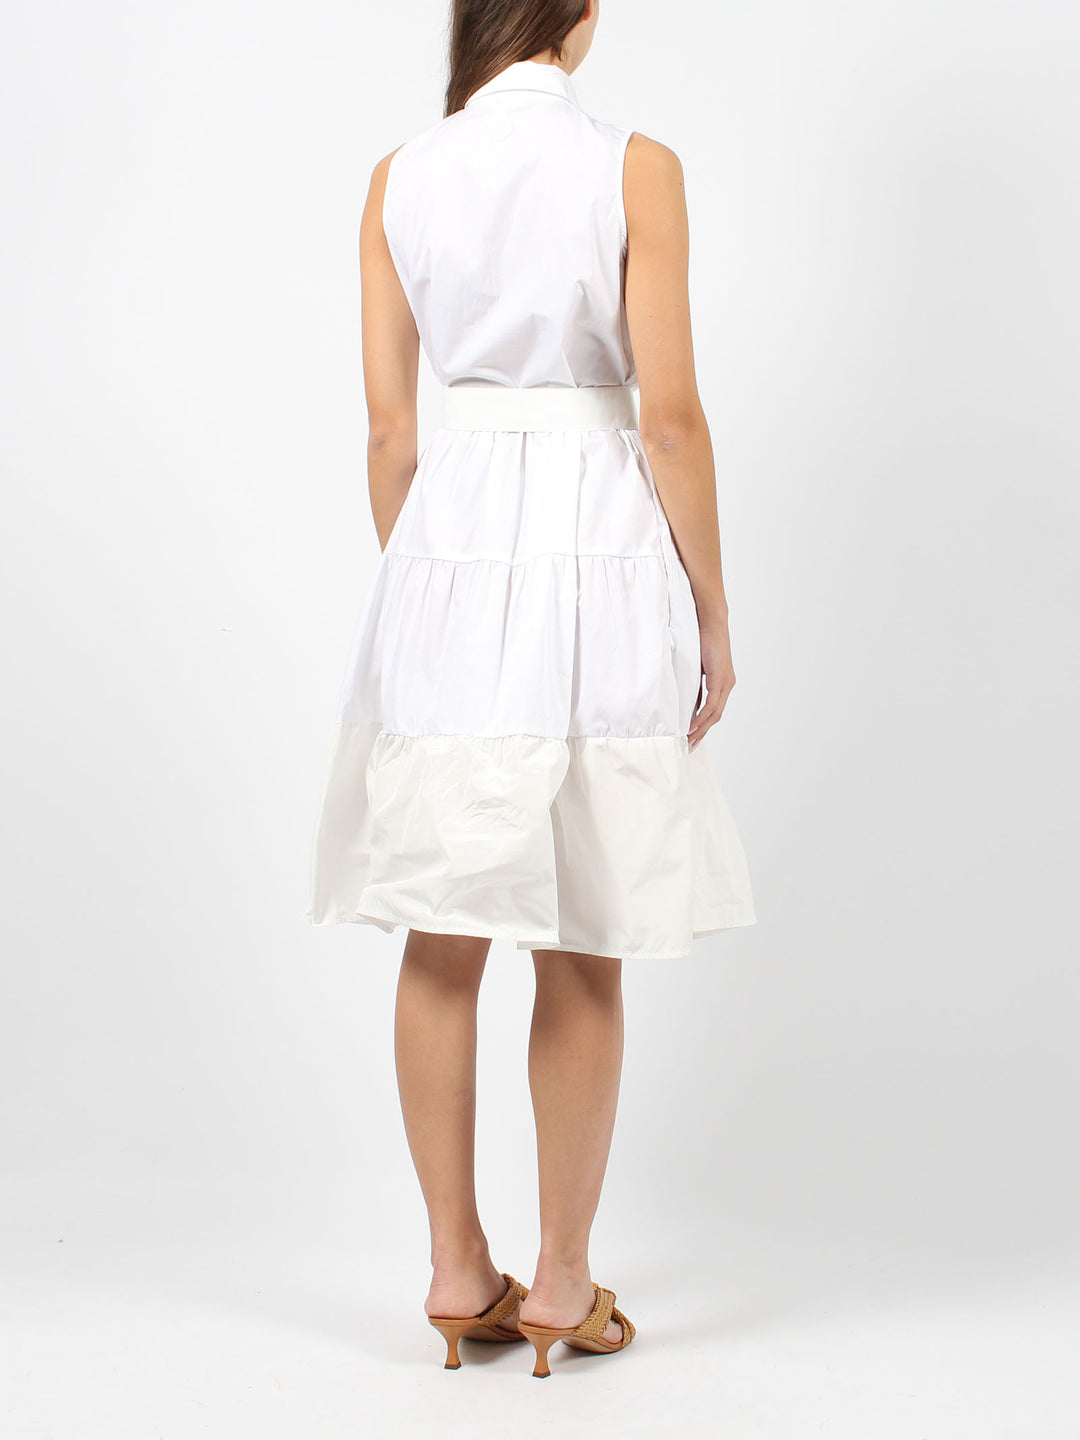 Cotton sleeveless dress